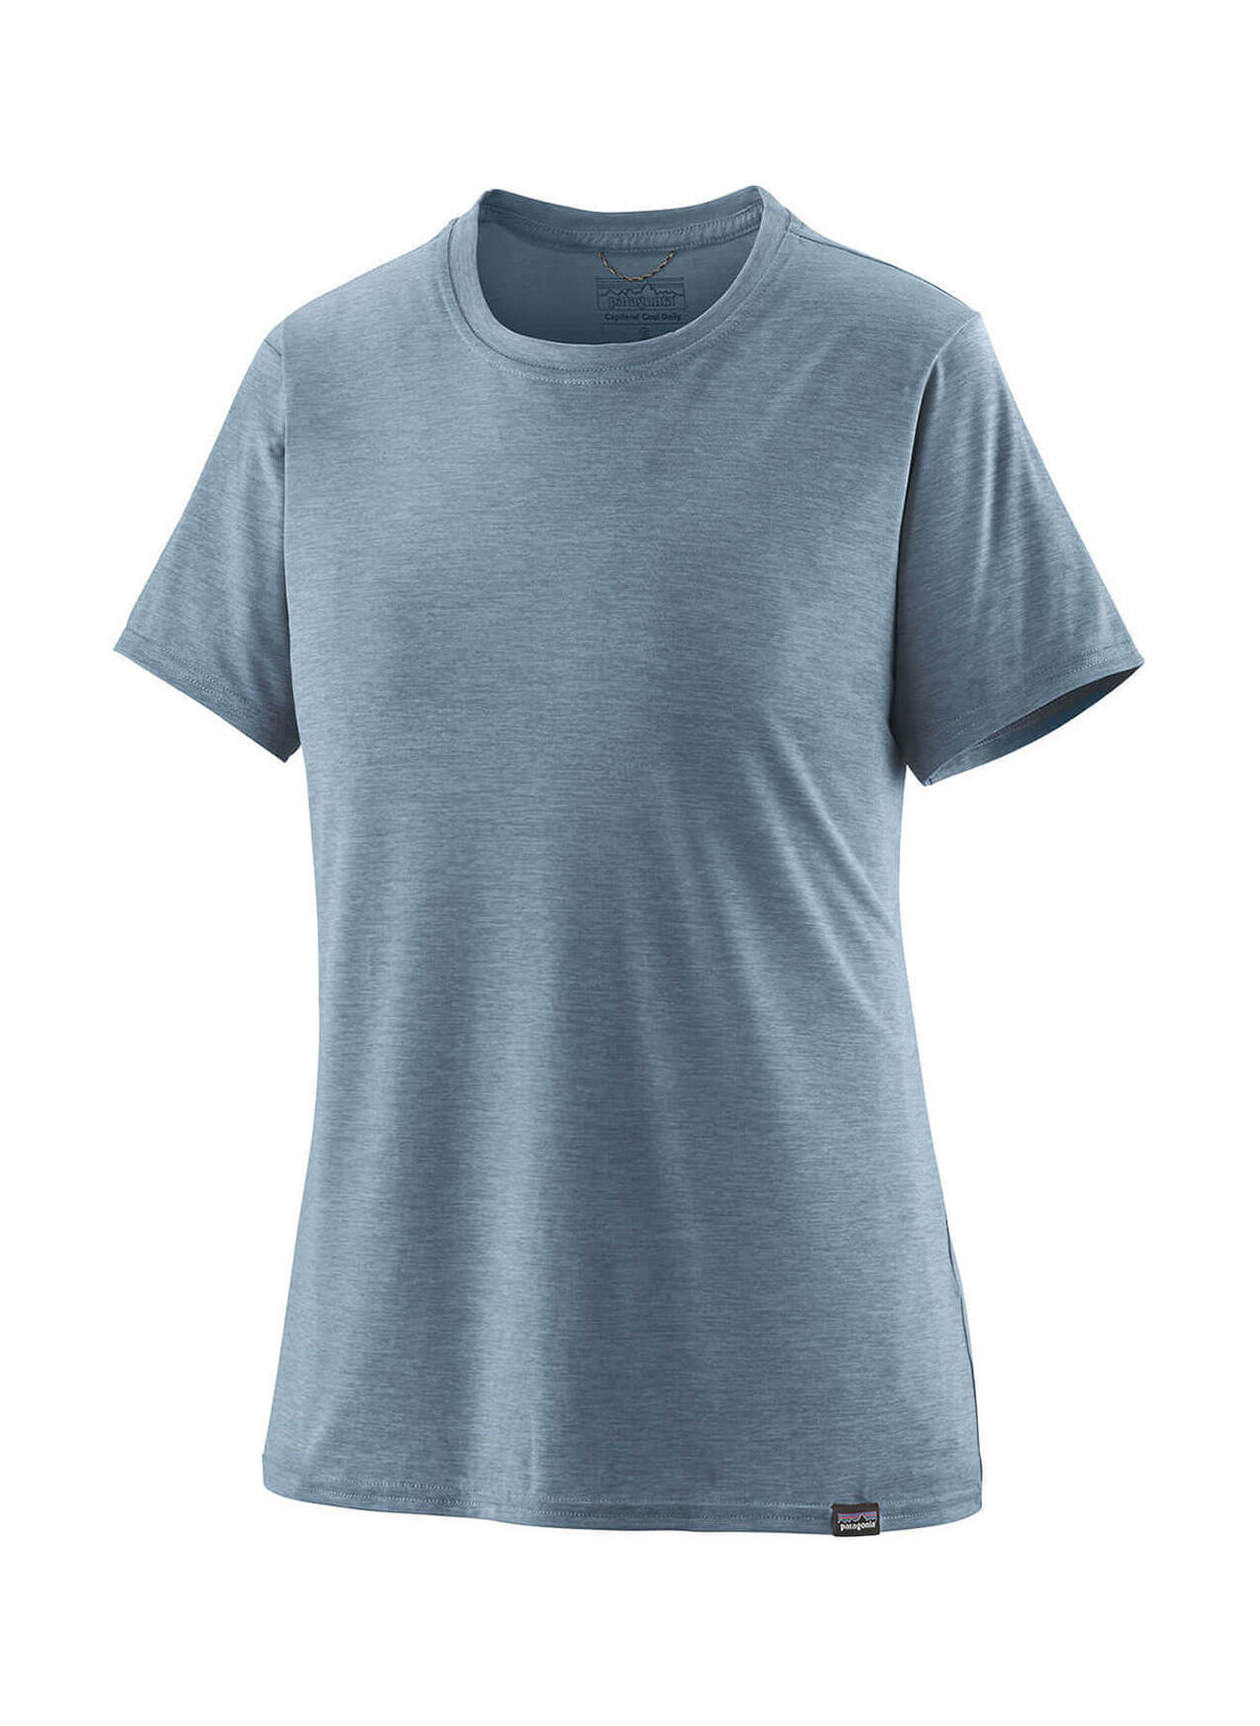 Patagonia Women's Steam Blue / Light Plume Grey Cap Cool Daily T-Shirt